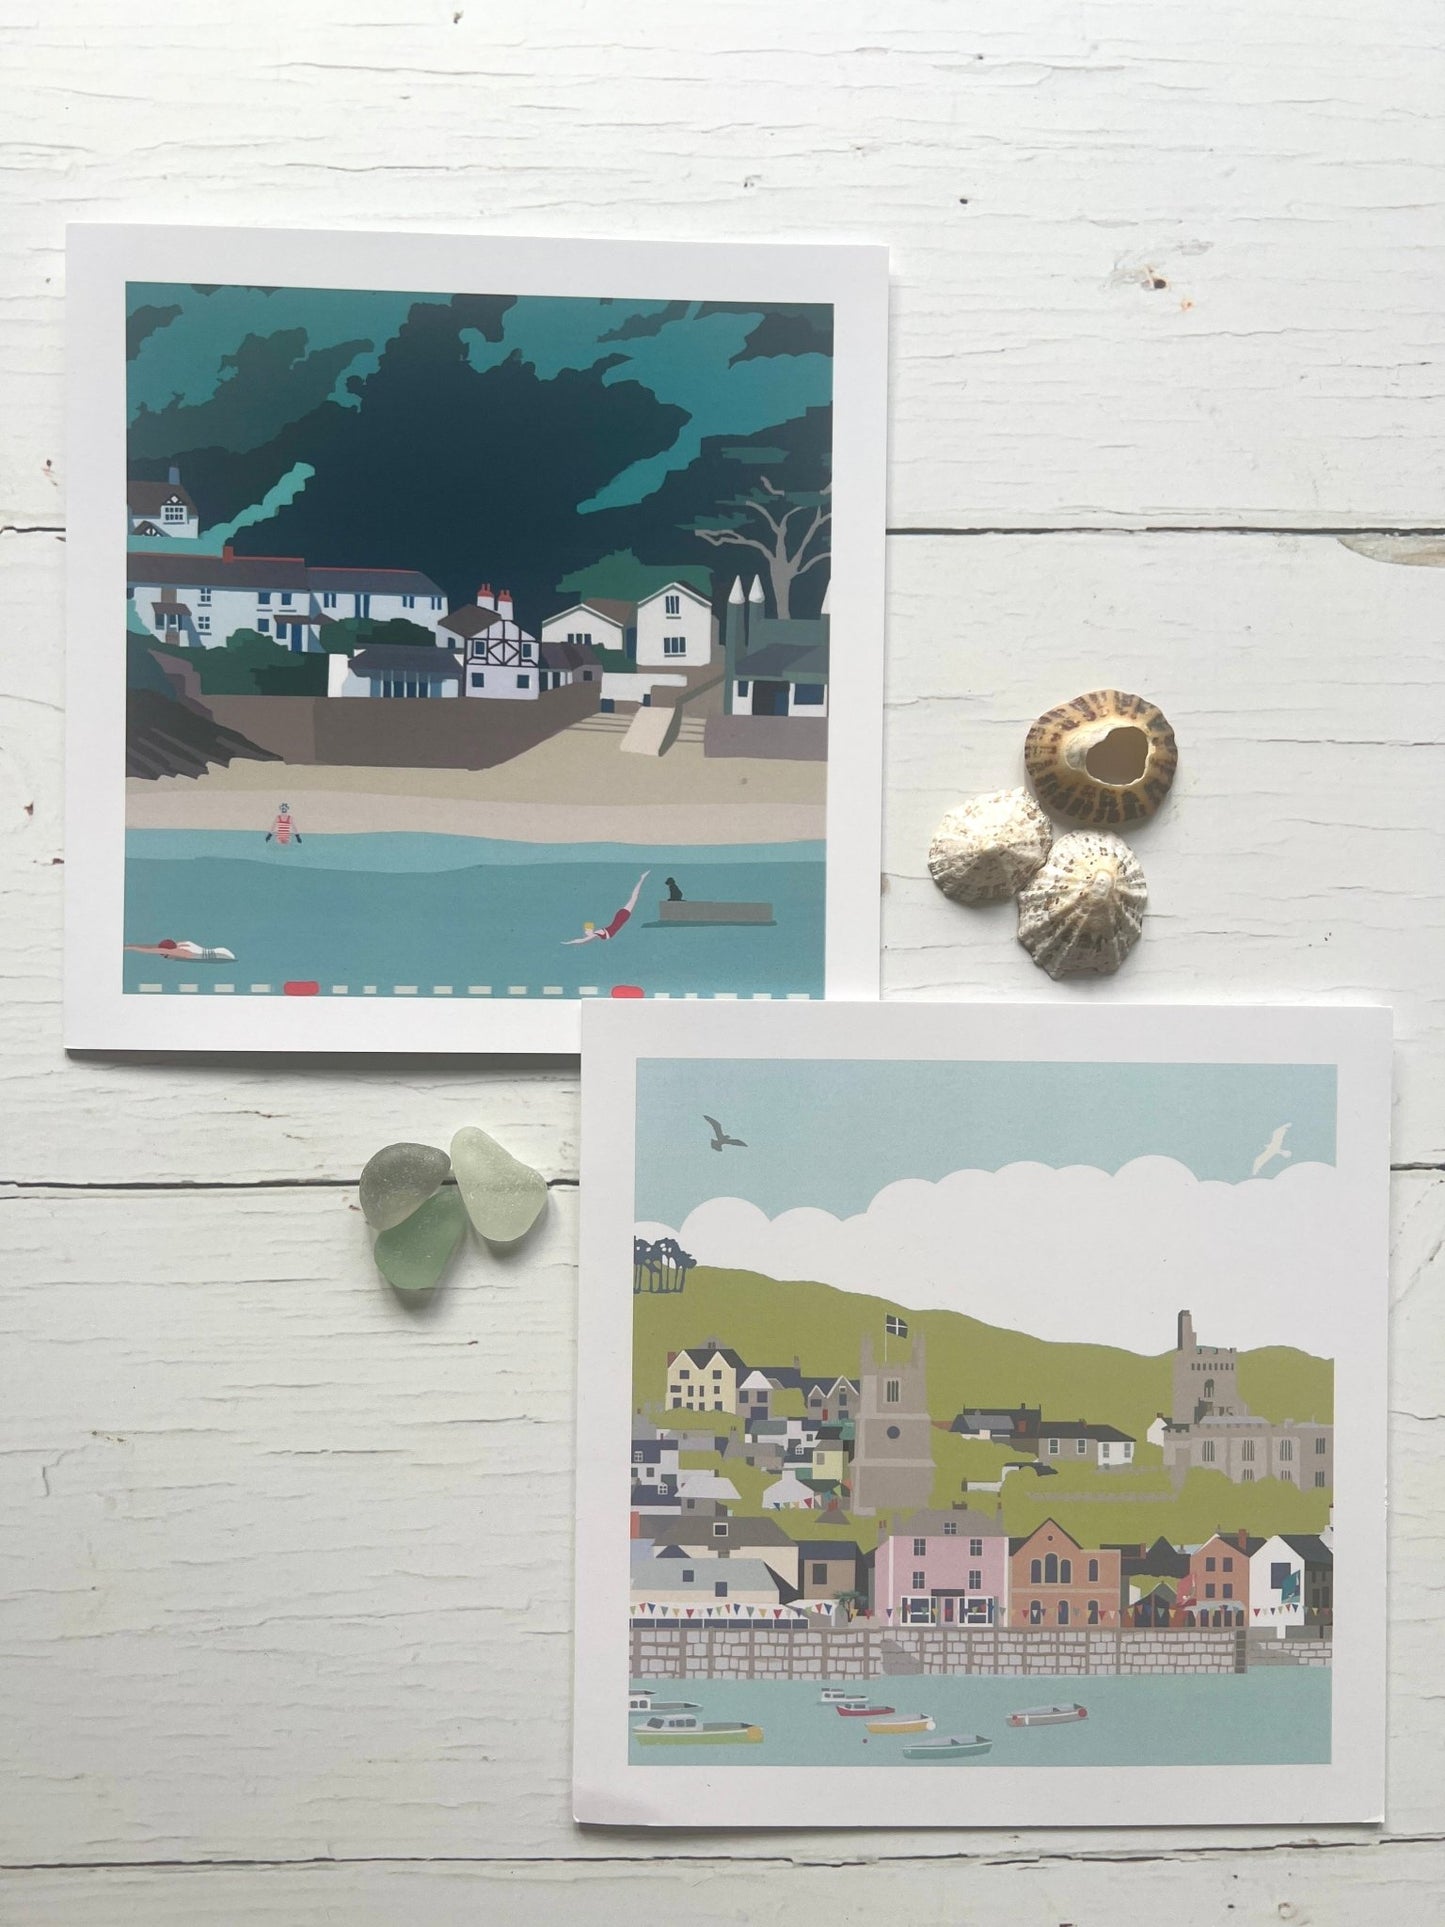 Readymoney Cove & Fowey Illustrated Greetings Cards - Readymoney Beach Shop